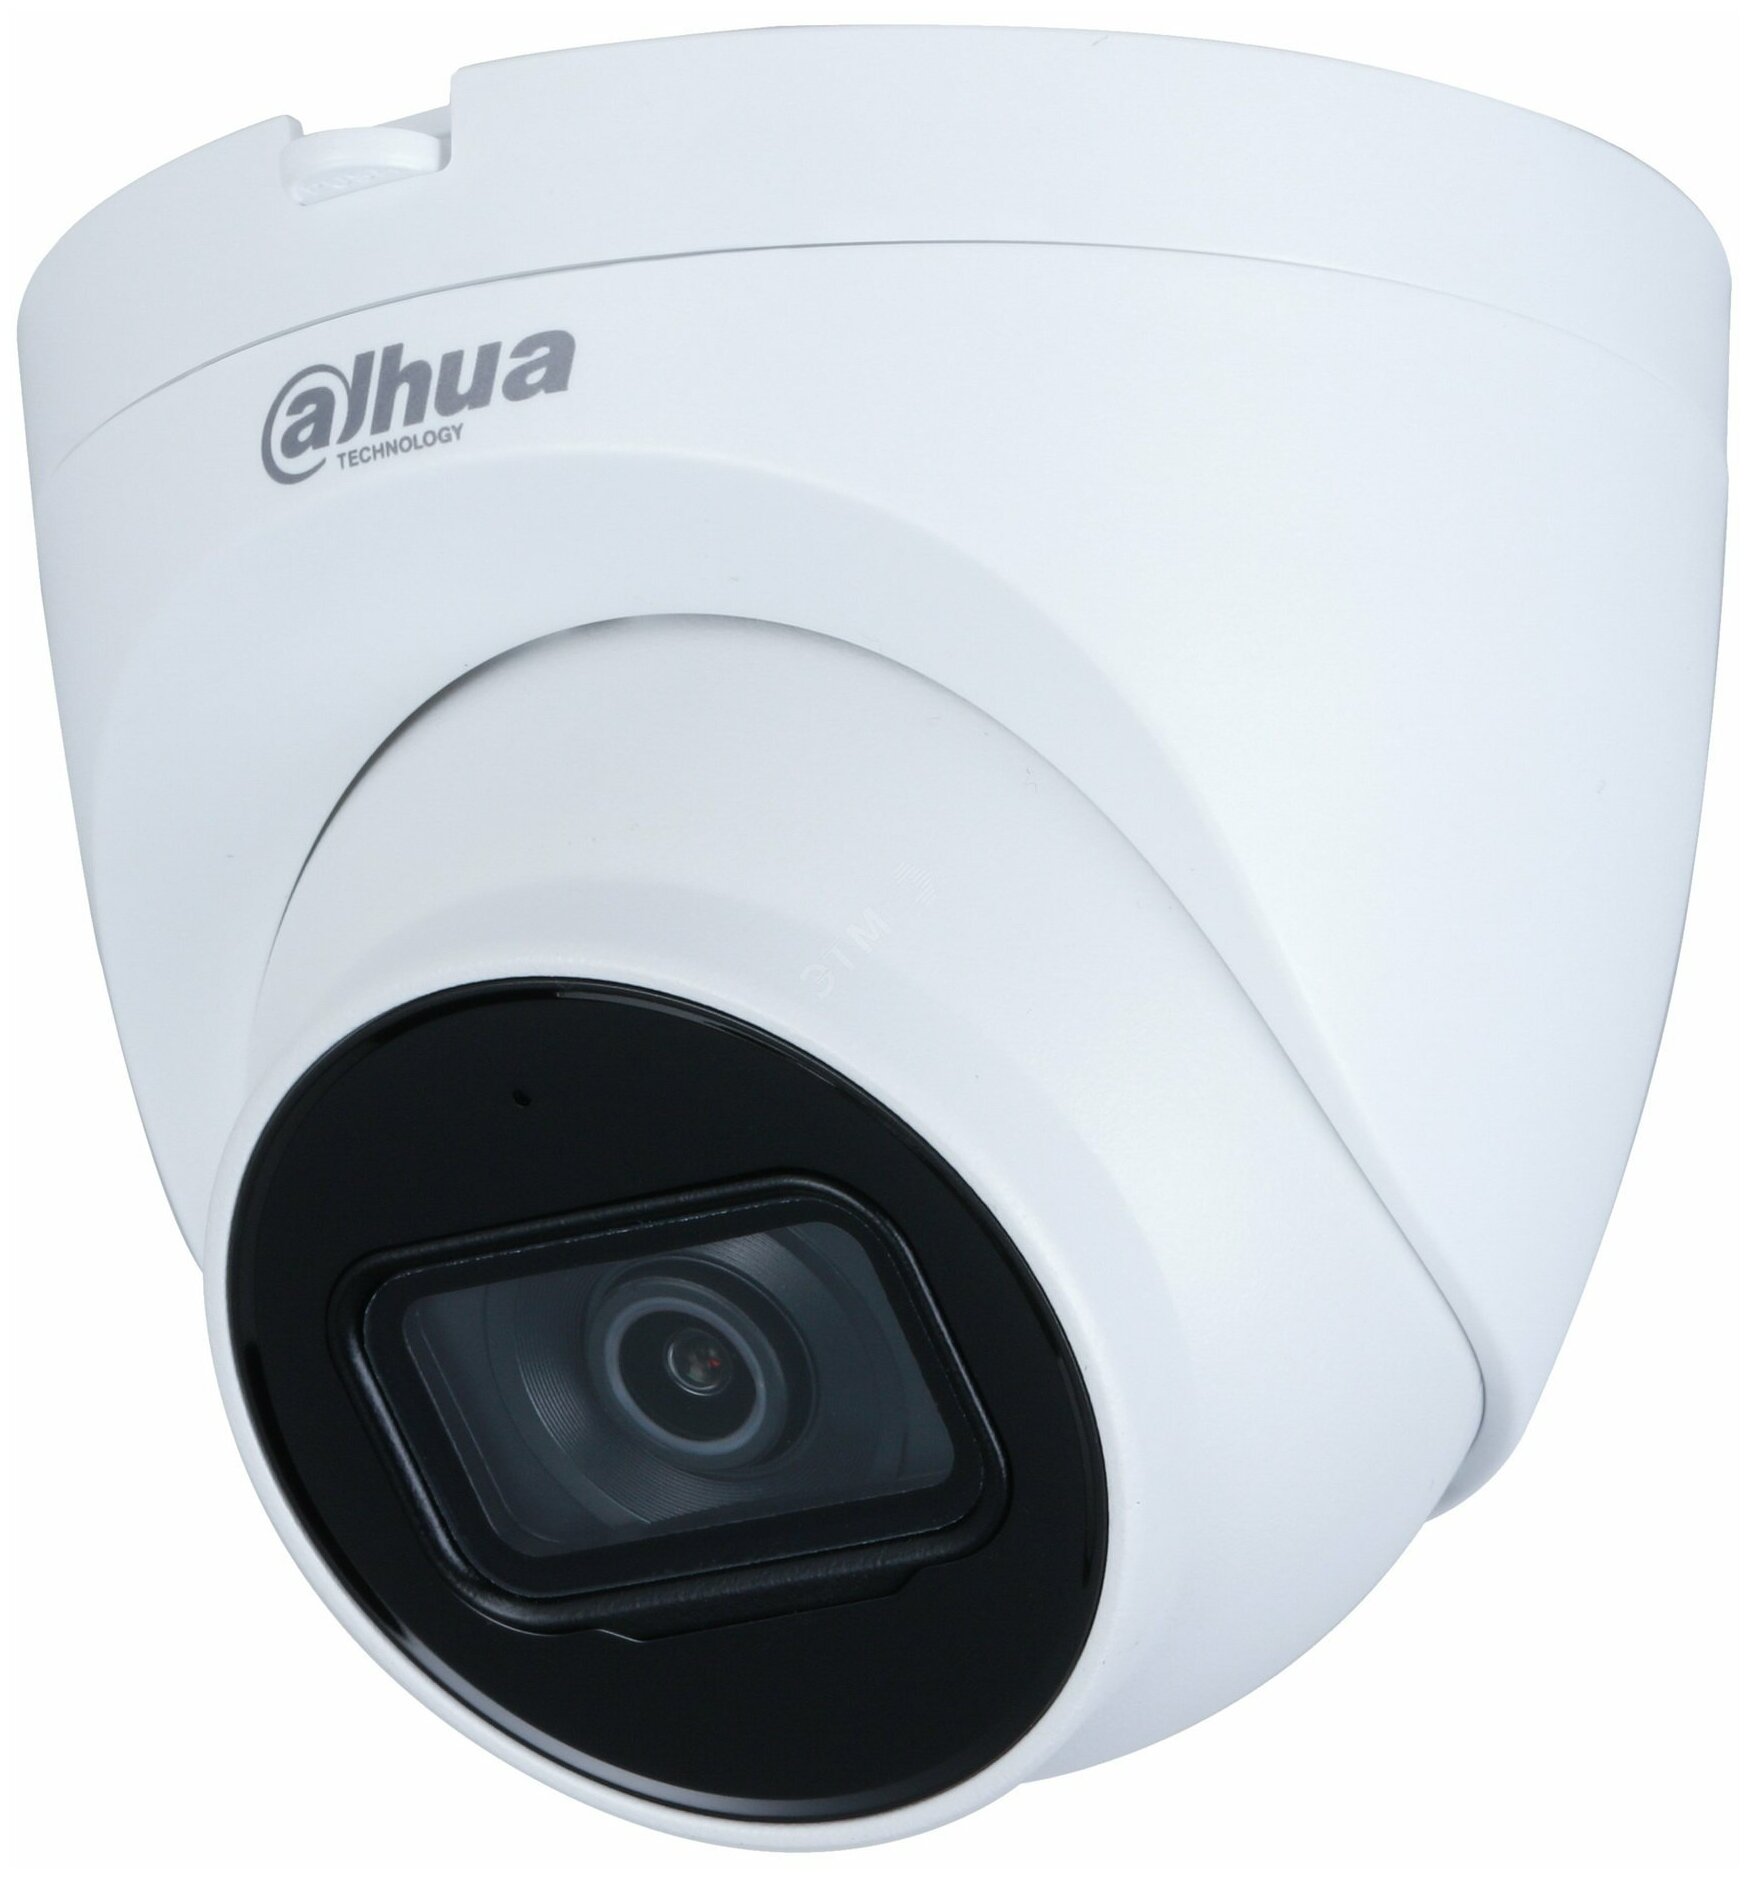 IP камера Dahua DH-IPC-HDW2230TP-AS-0360B